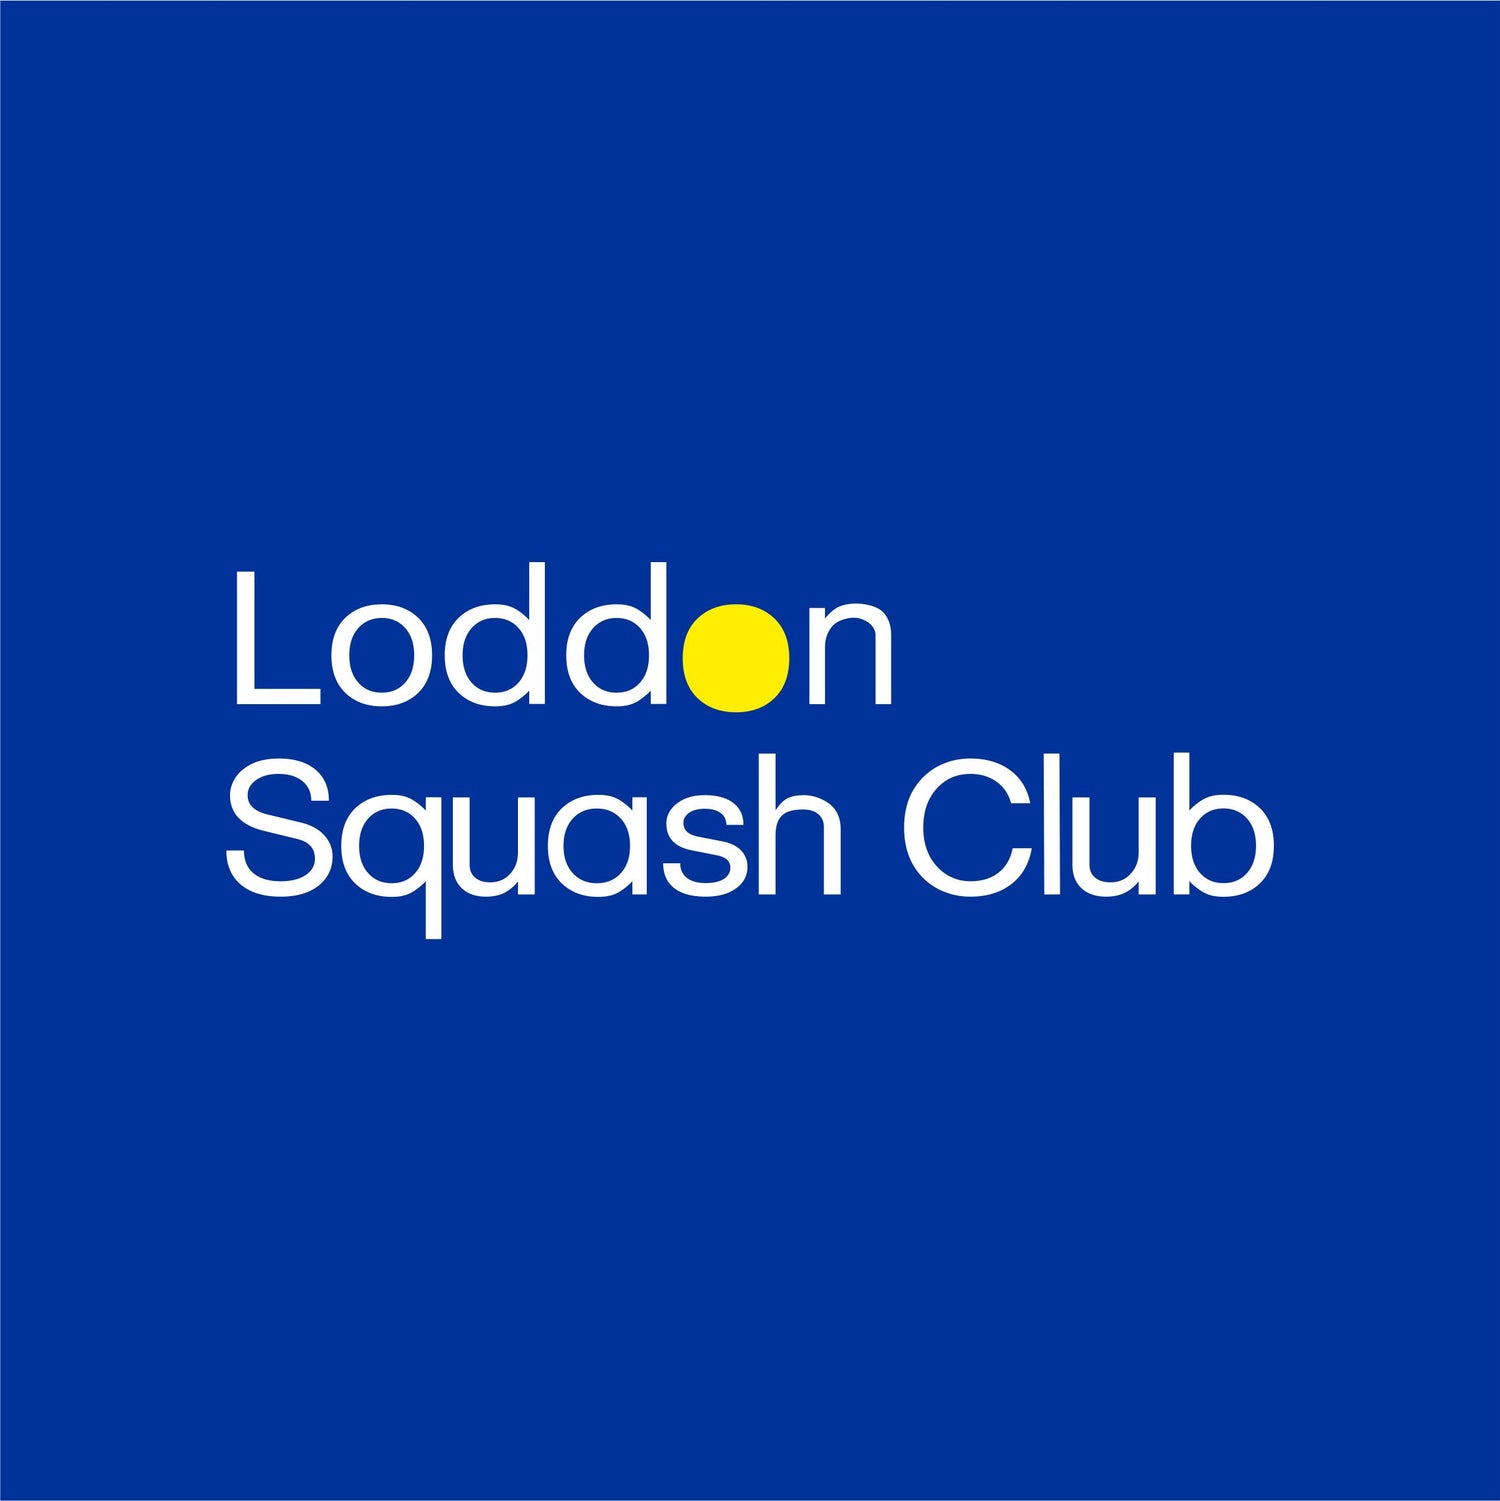 Loddon Squash Club